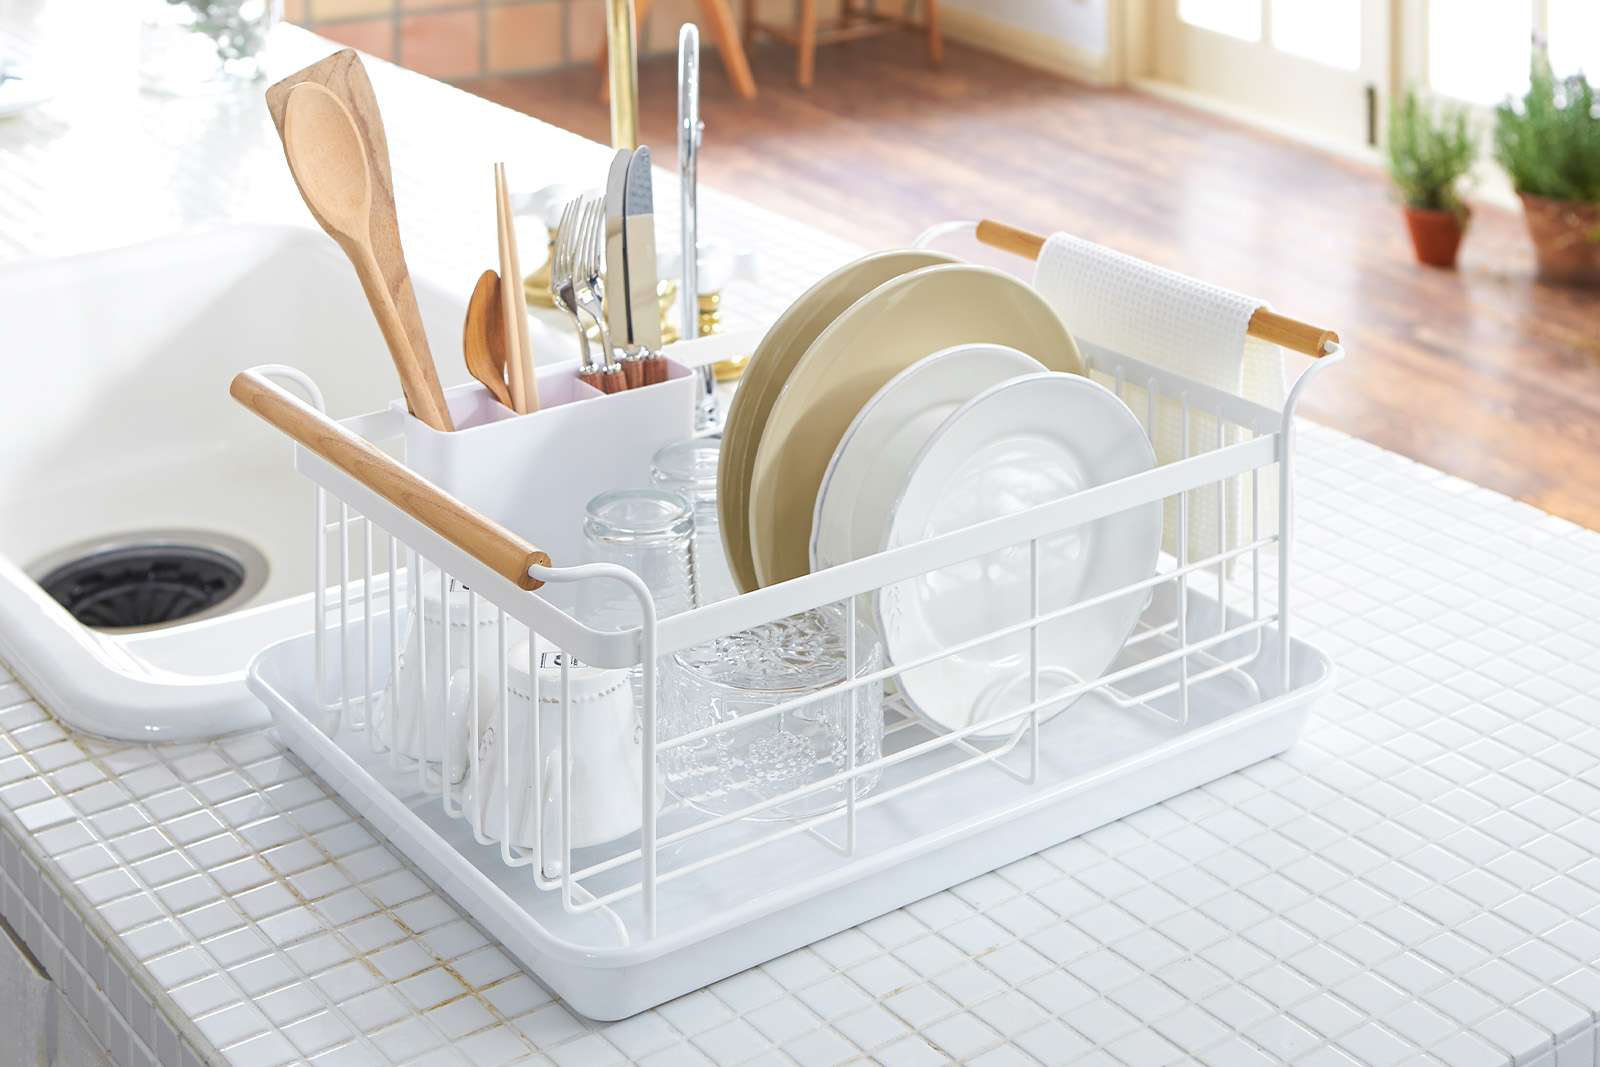 Yamazaki Home Dish Rack holding plates on a kitchen counter. 